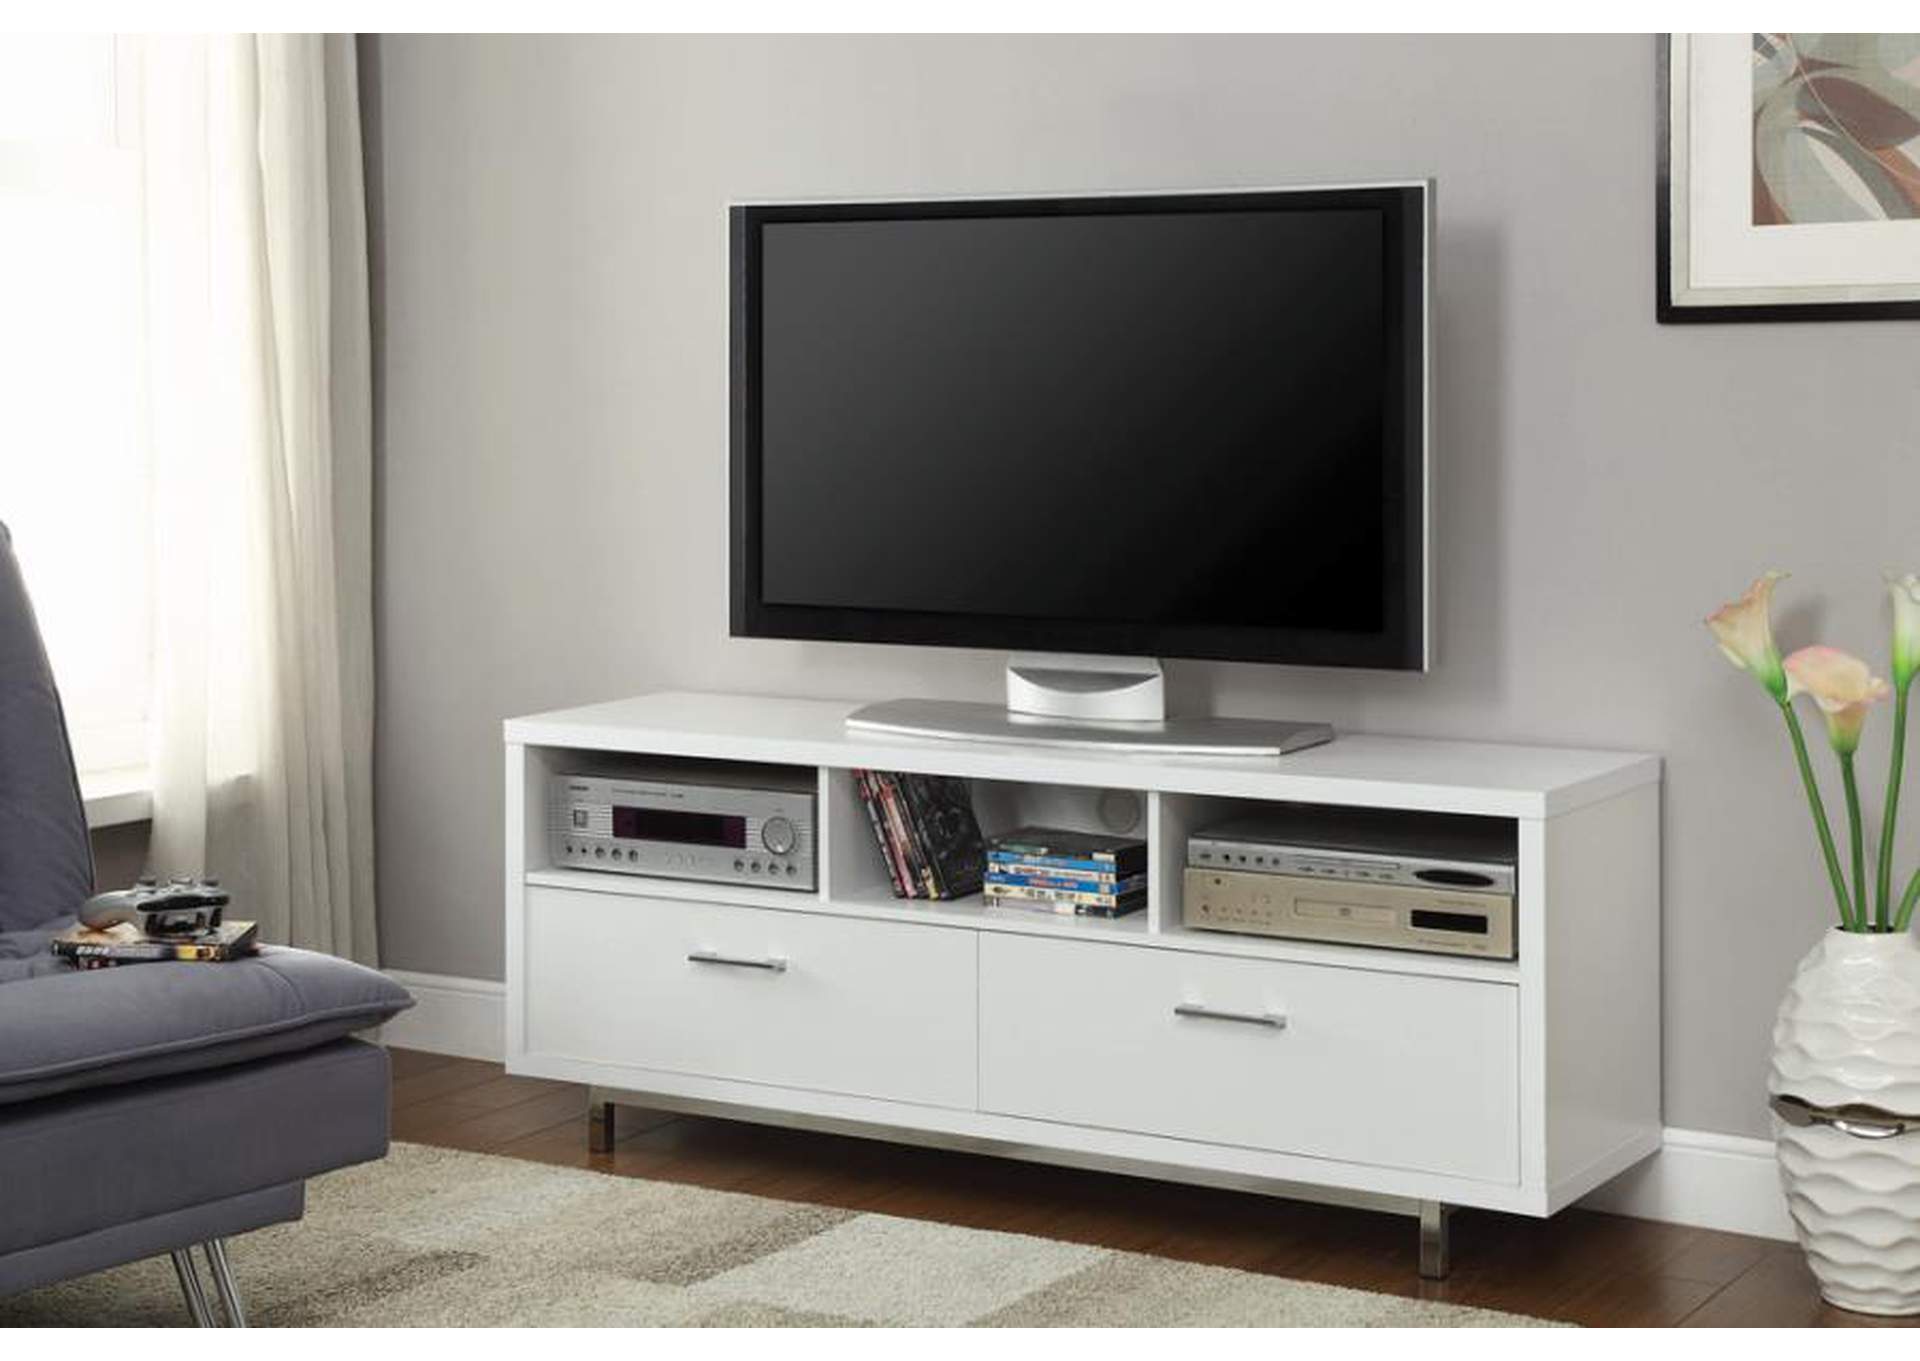 2-drawer Rectangular TV Console White,Coaster Furniture